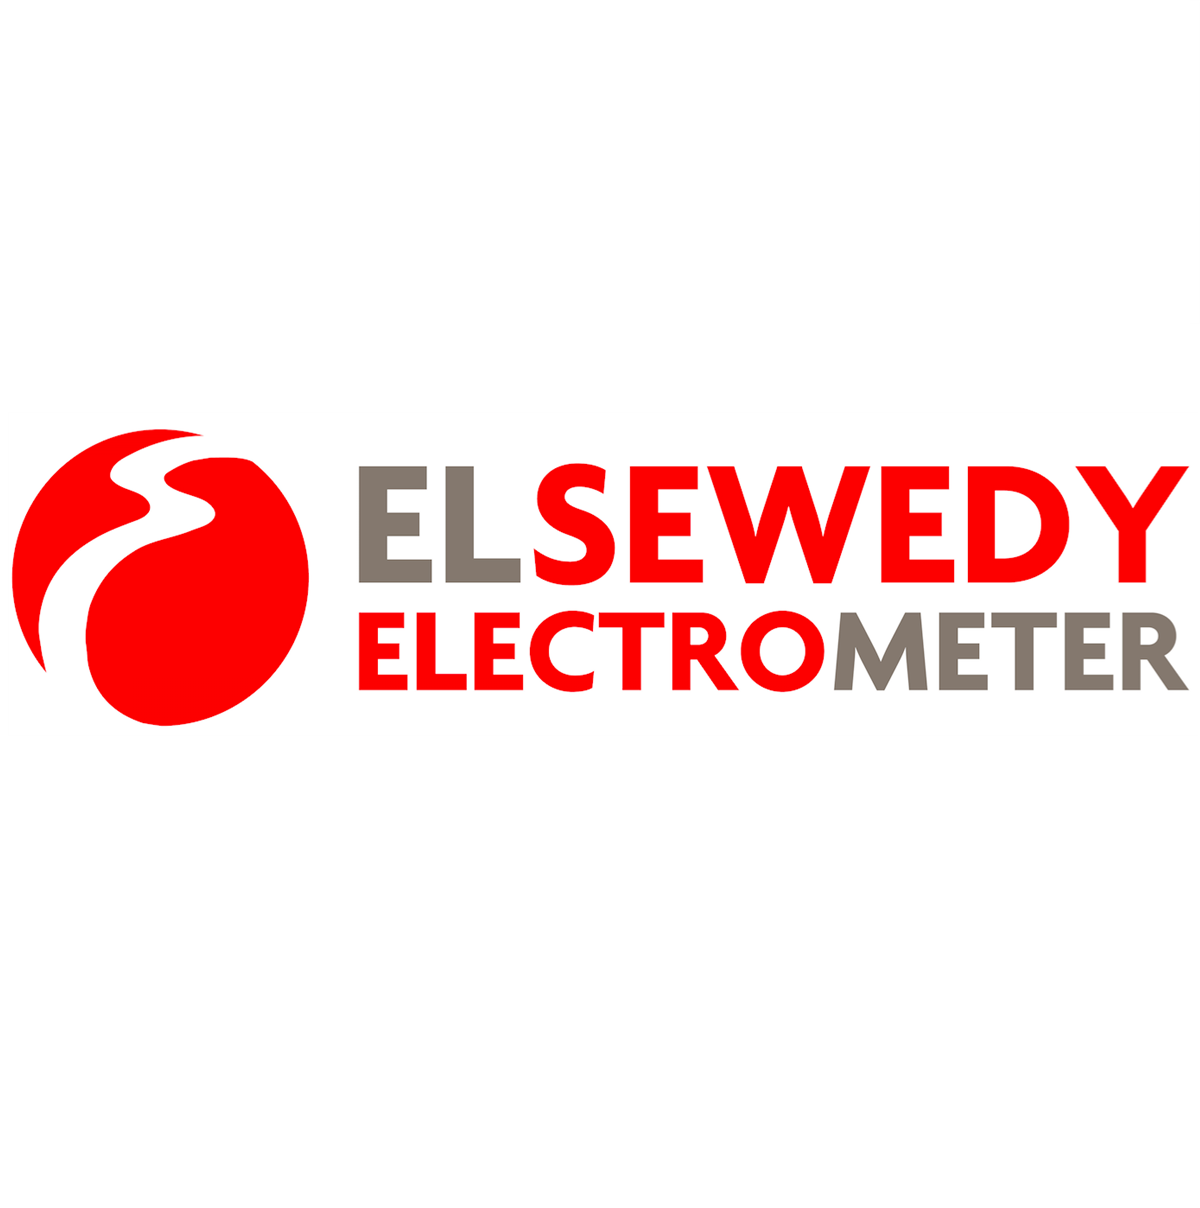 Elsewedy Electrometer